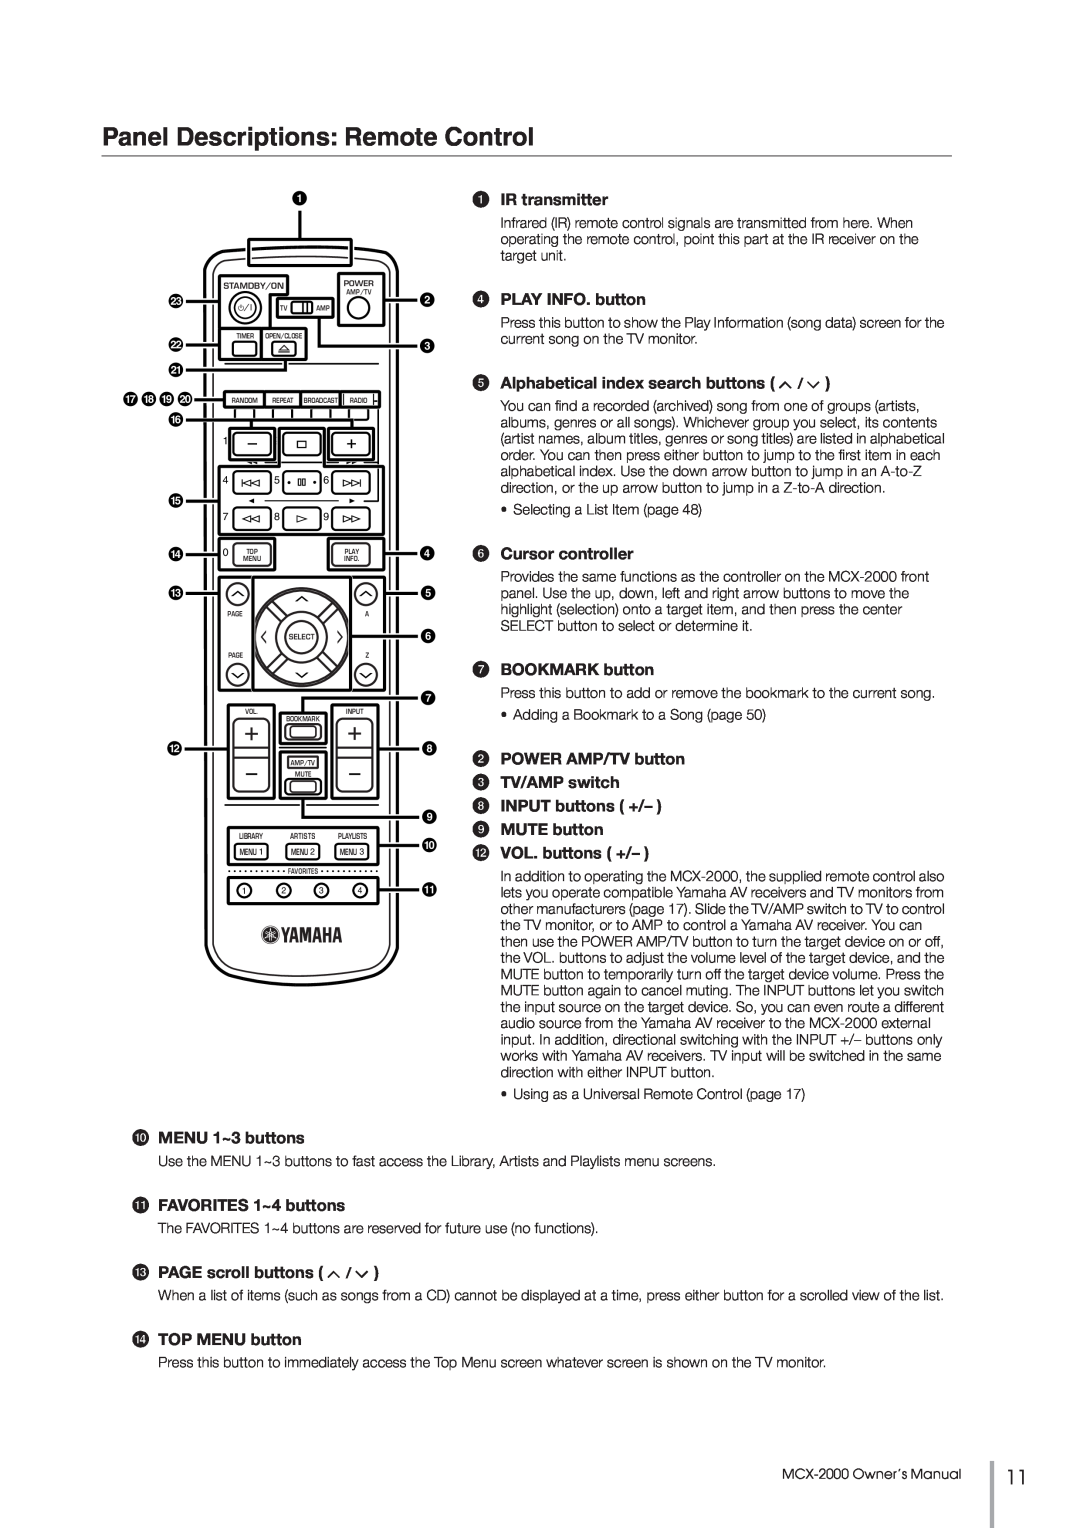 Yamaha MCX-2000 setup guide Panel Descriptions: Remote Control, 1IR transmitter, PLAY INFO. button, Cursor controller 